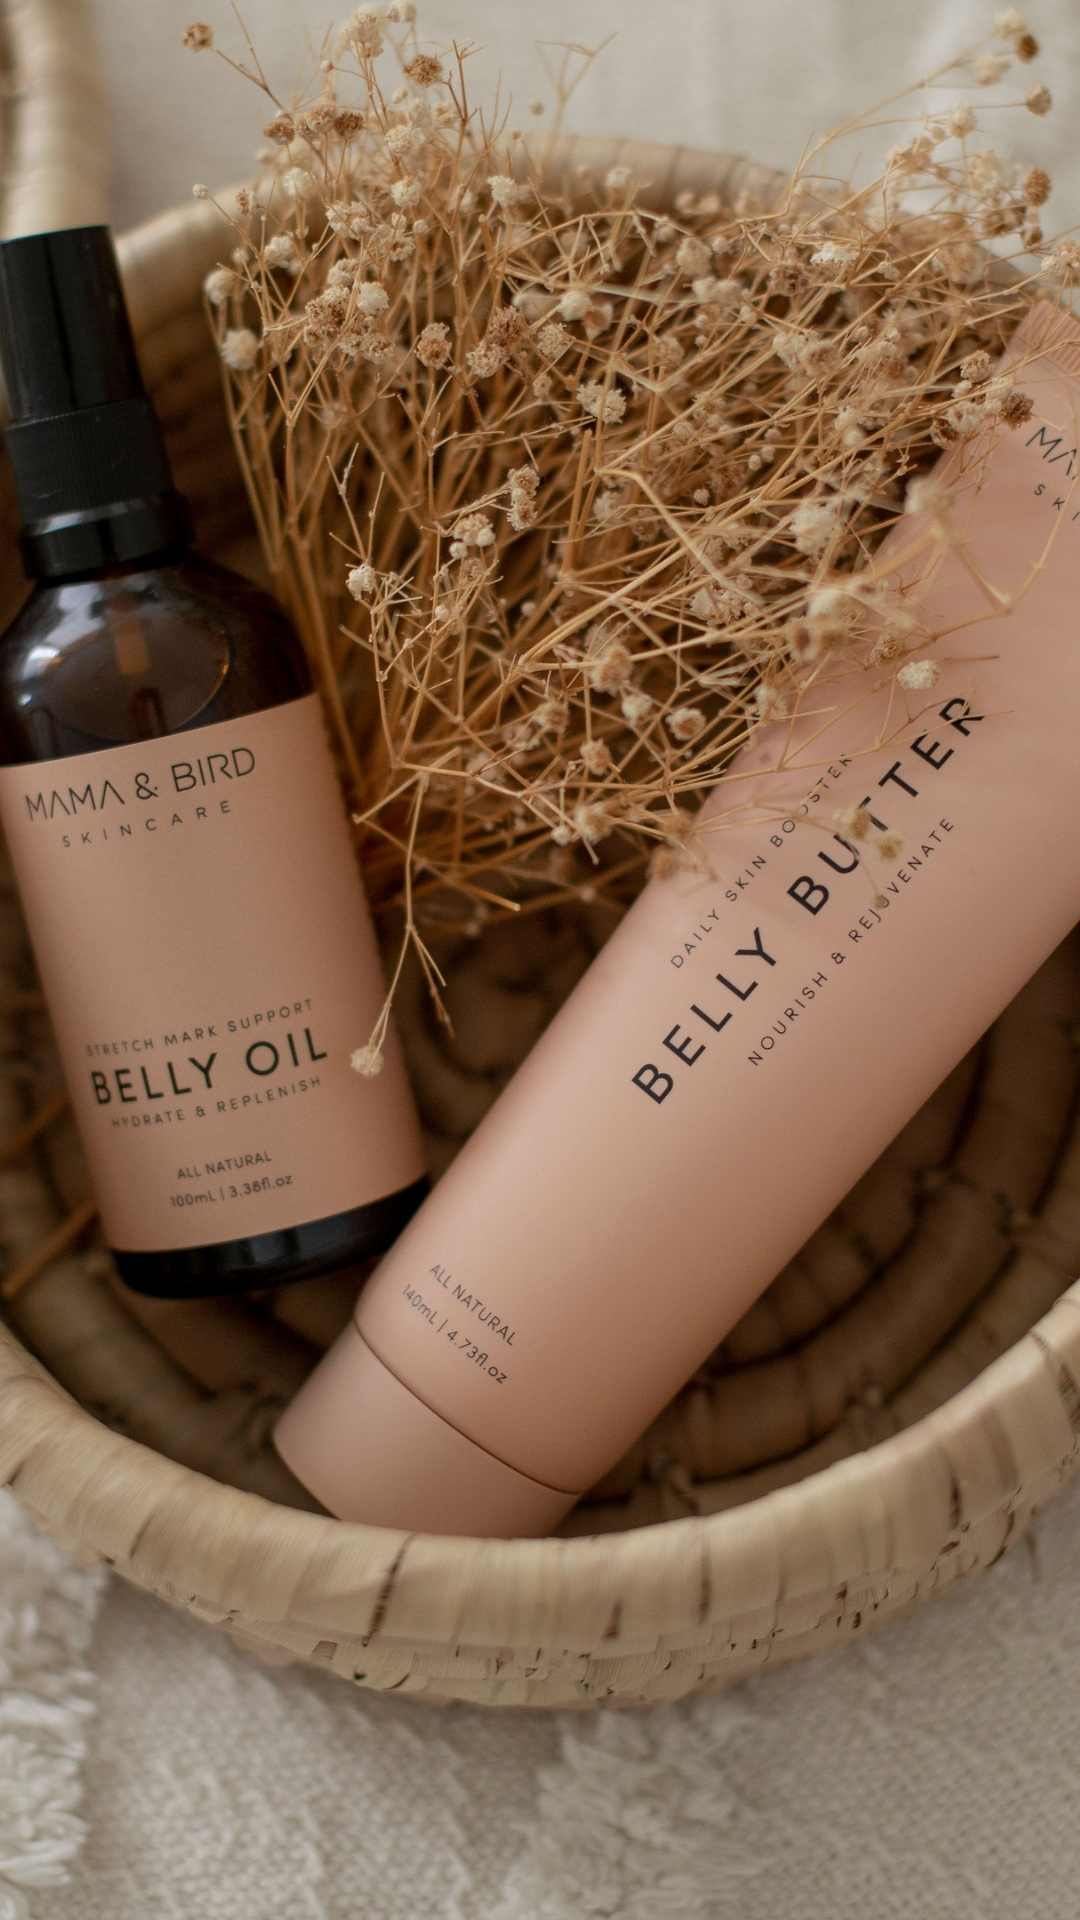 Mama & Bird Belly Oil